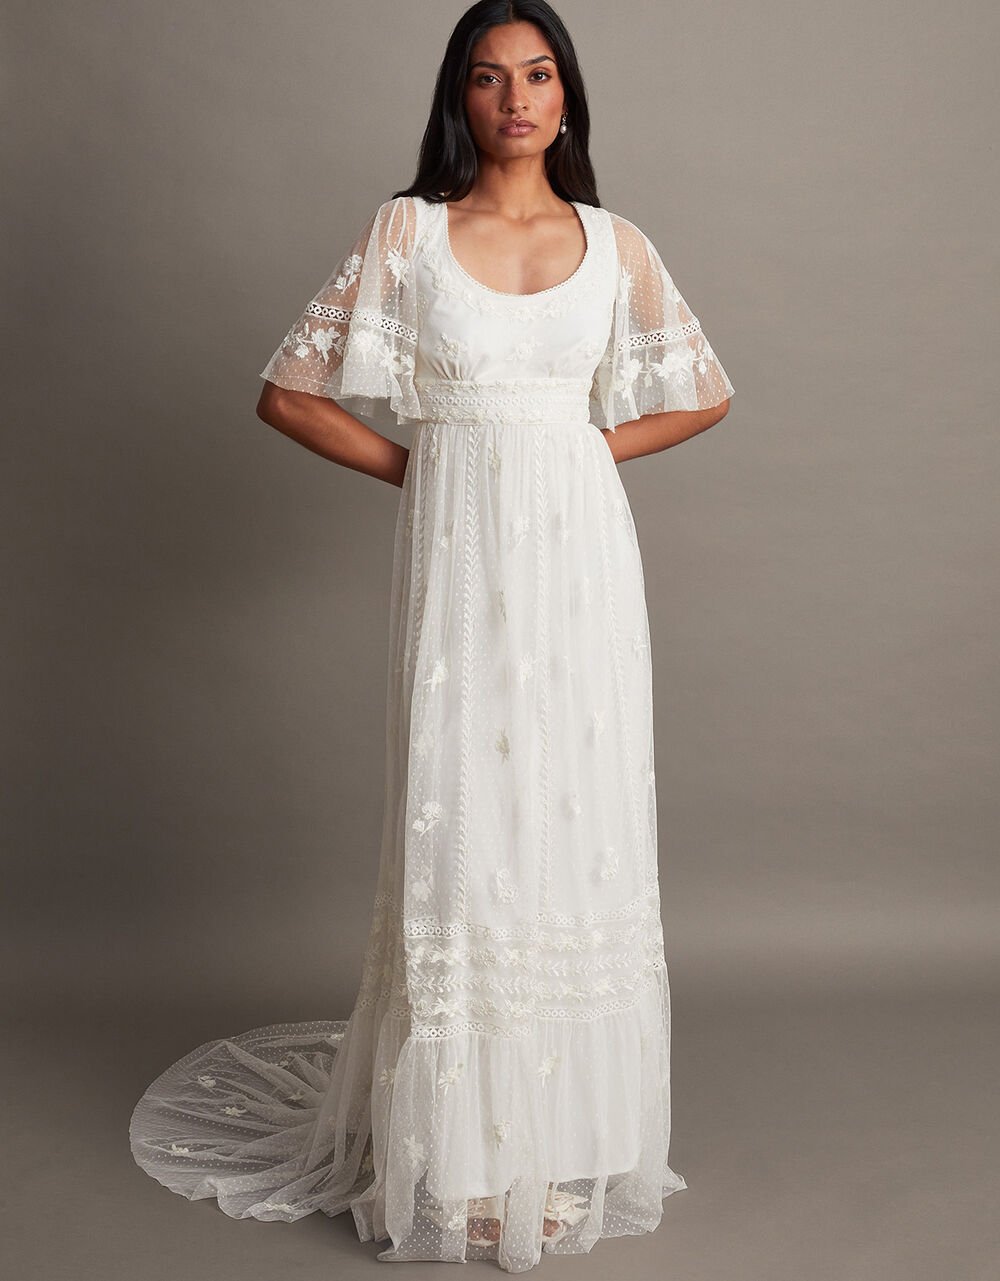 Julita Embroidered Lace Trim Bridal Dress Ivory | Wedding Dresses ...